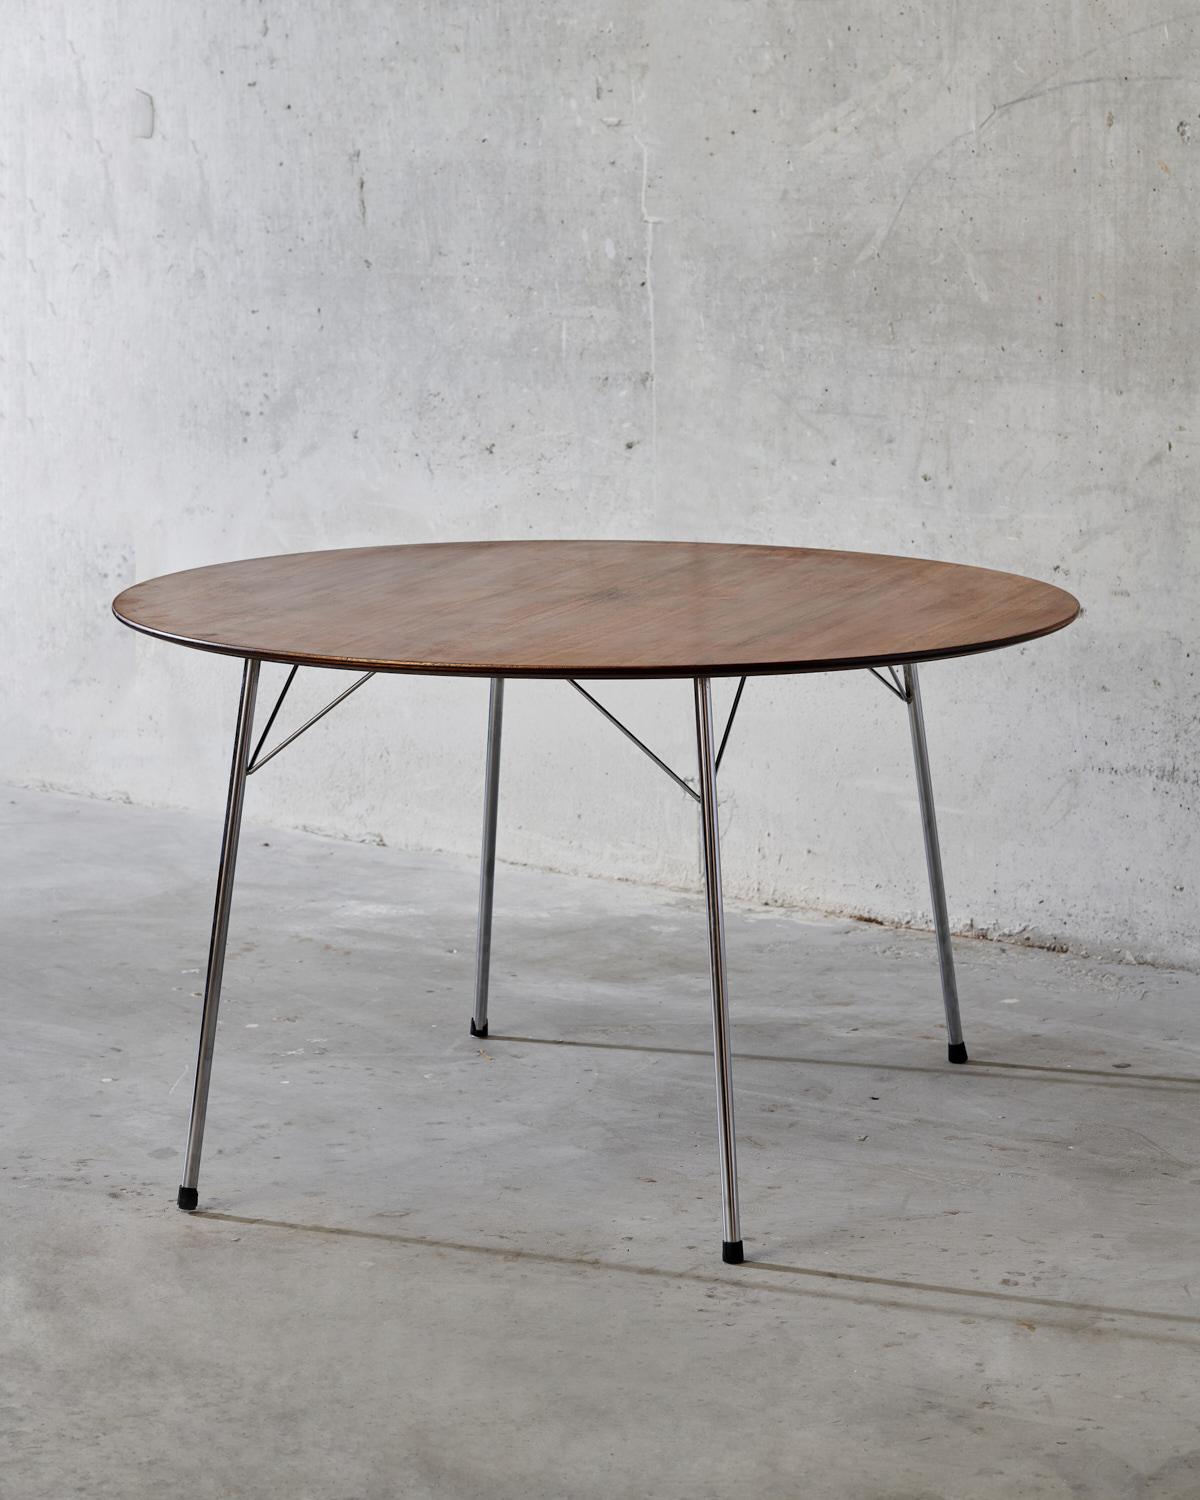 Scandinavian Modern Scandinavian Round Teak Dining Table Mod. 3600 by Arne Jacobsen for Fritz Hansen For Sale